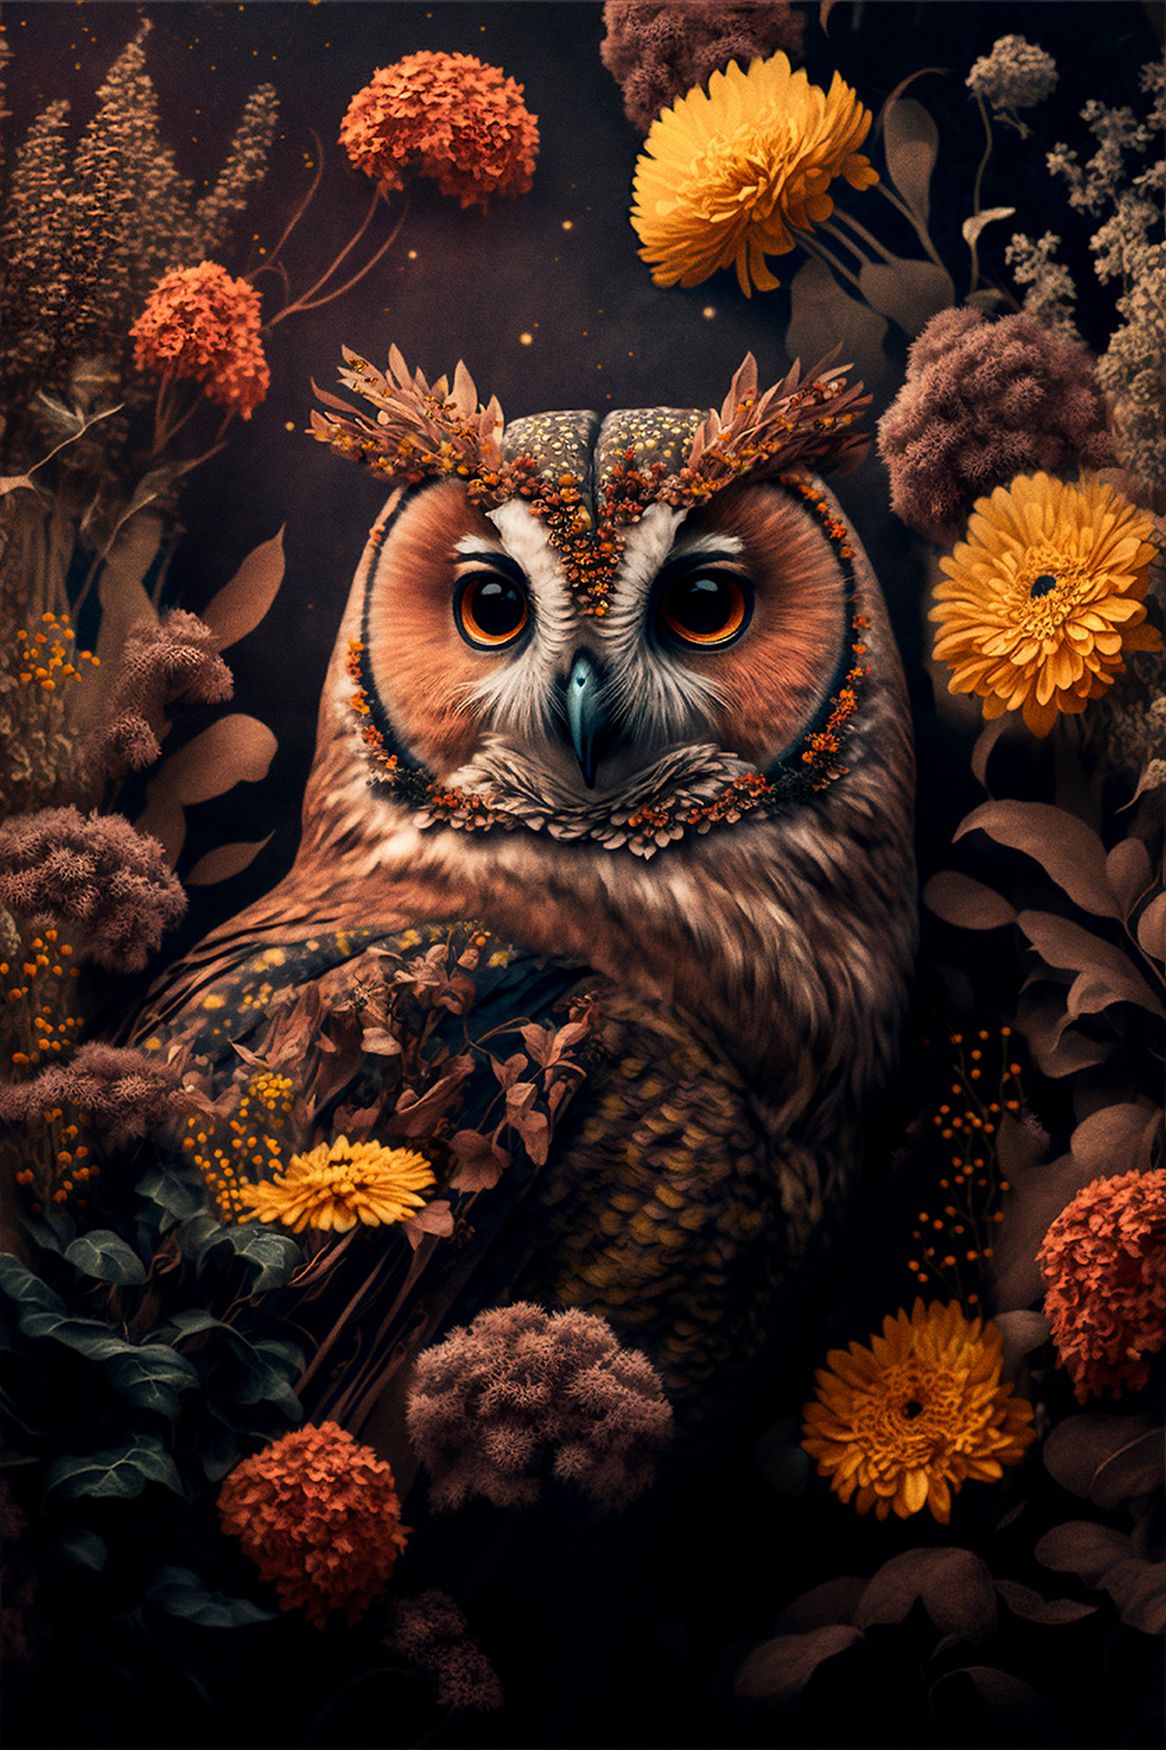 the-owl